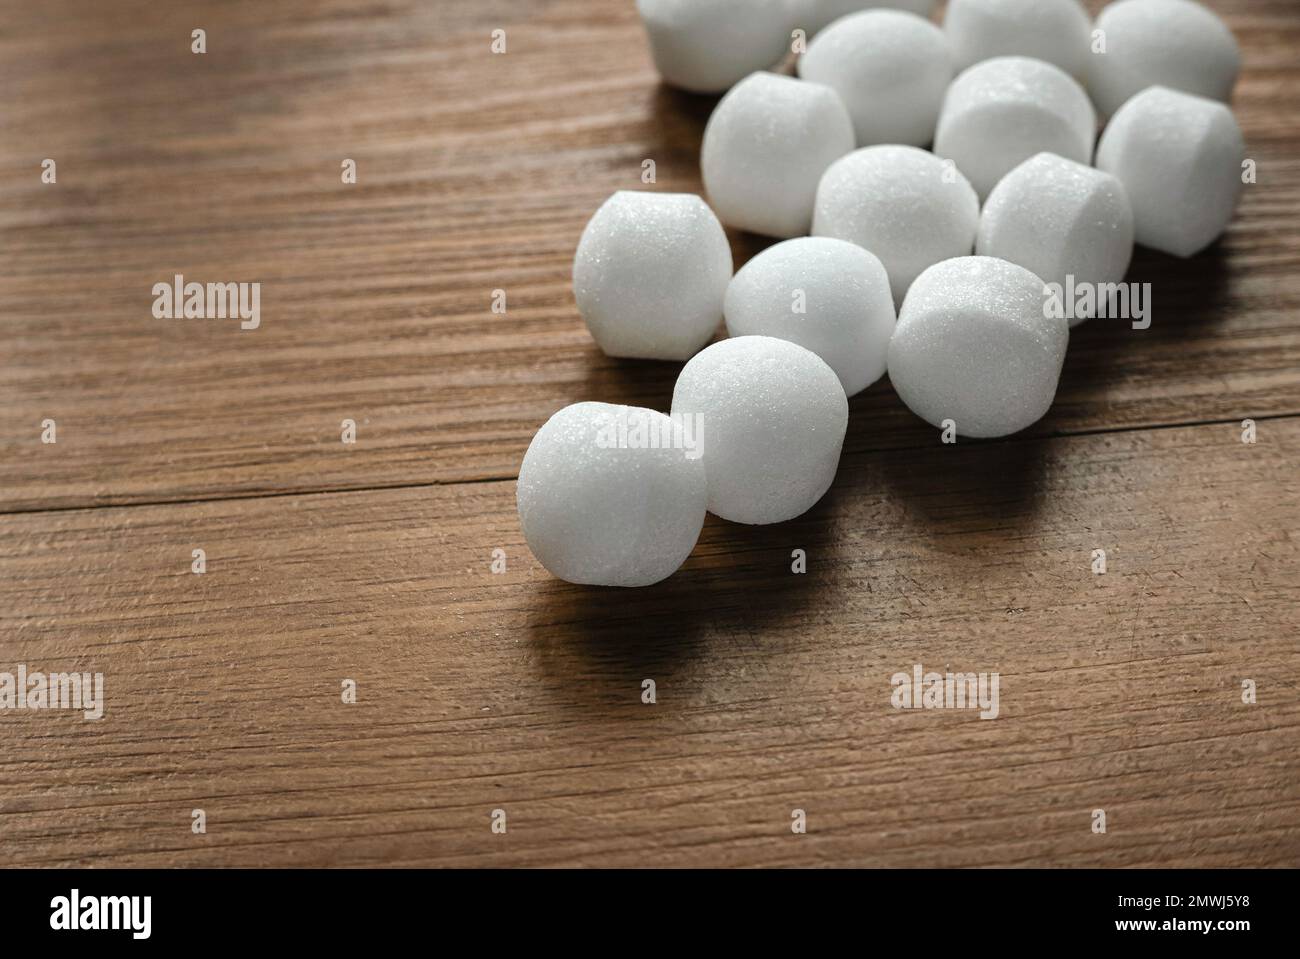 https://c8.alamy.com/comp/2MWJ5Y8/naphthalene-mothballs-on-wooden-background-2MWJ5Y8.jpg